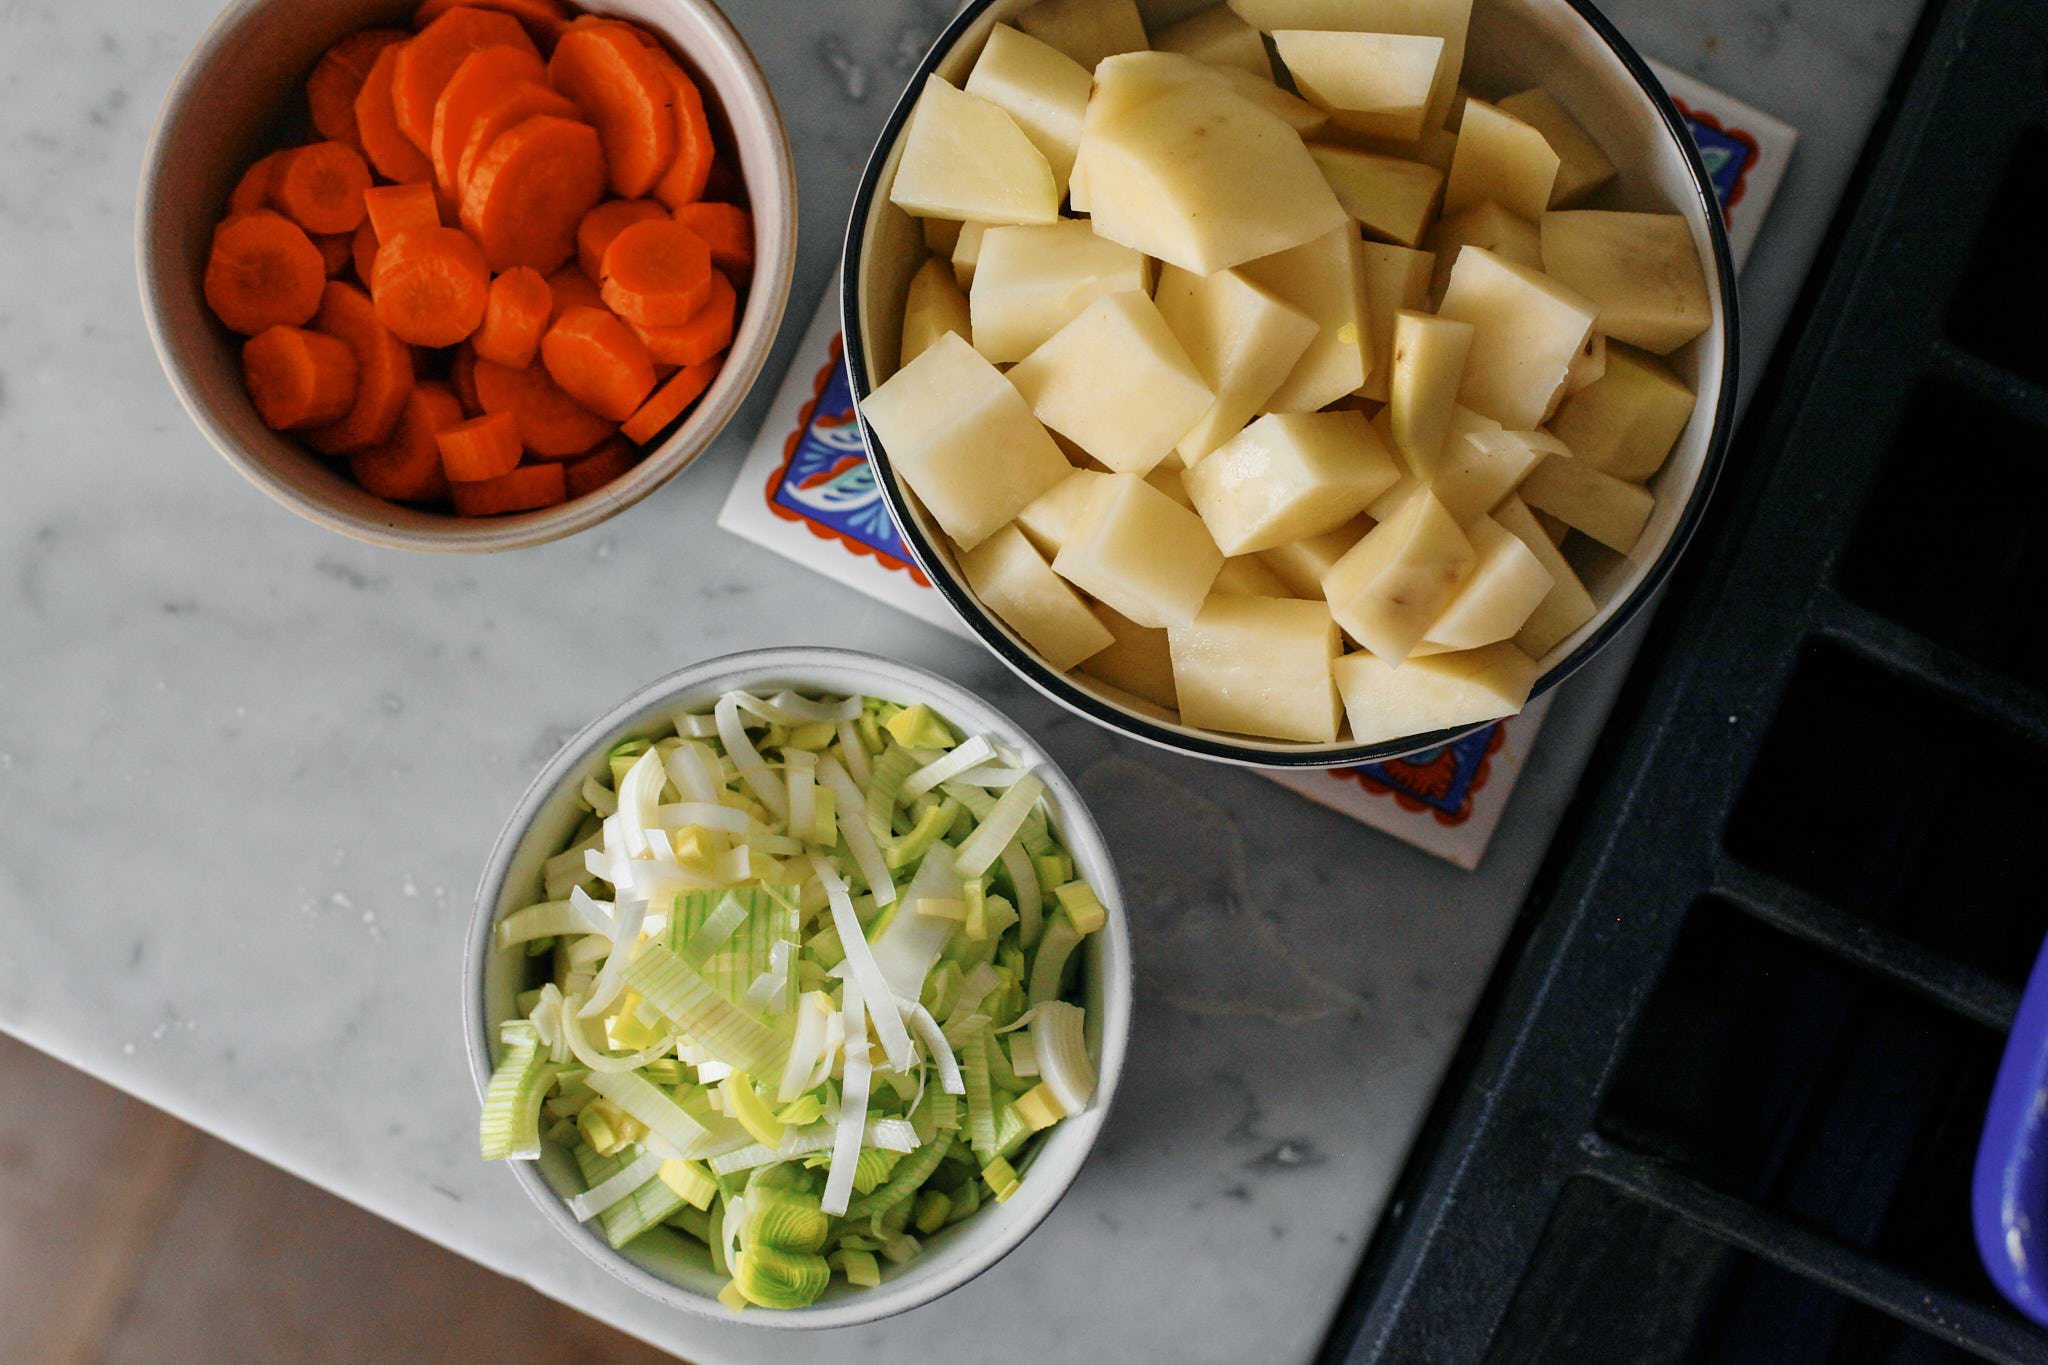 prep for finnish salmon soup: carrots, potato and leek